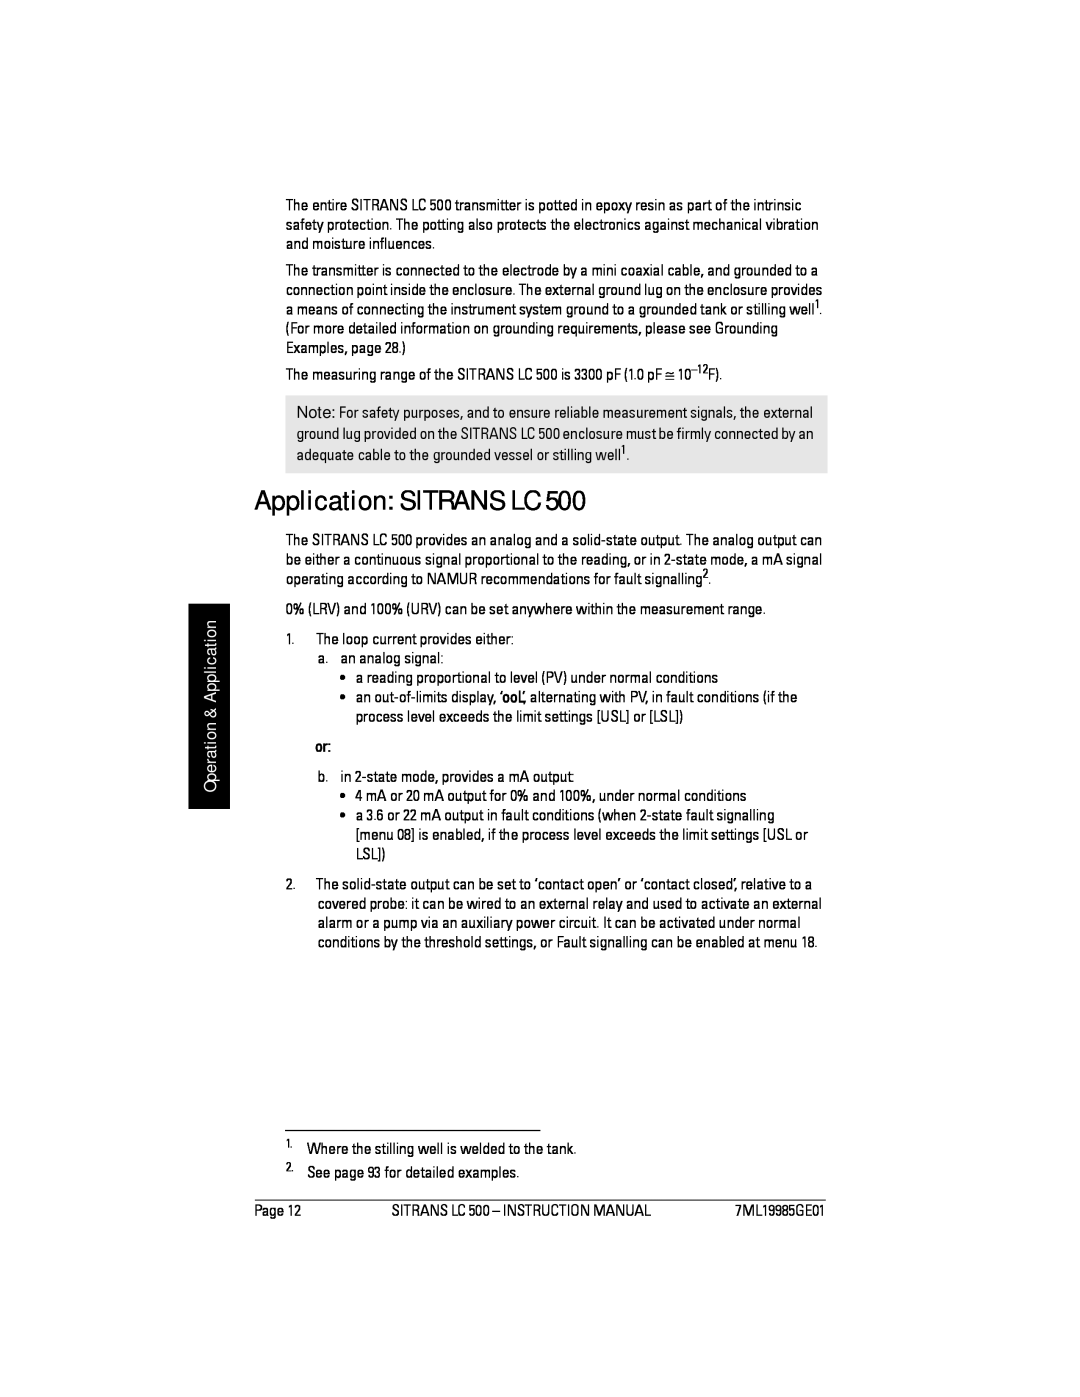 Siemens LC 500, Sitrans instruction manual Application SITRANS LC, Operation & Application 